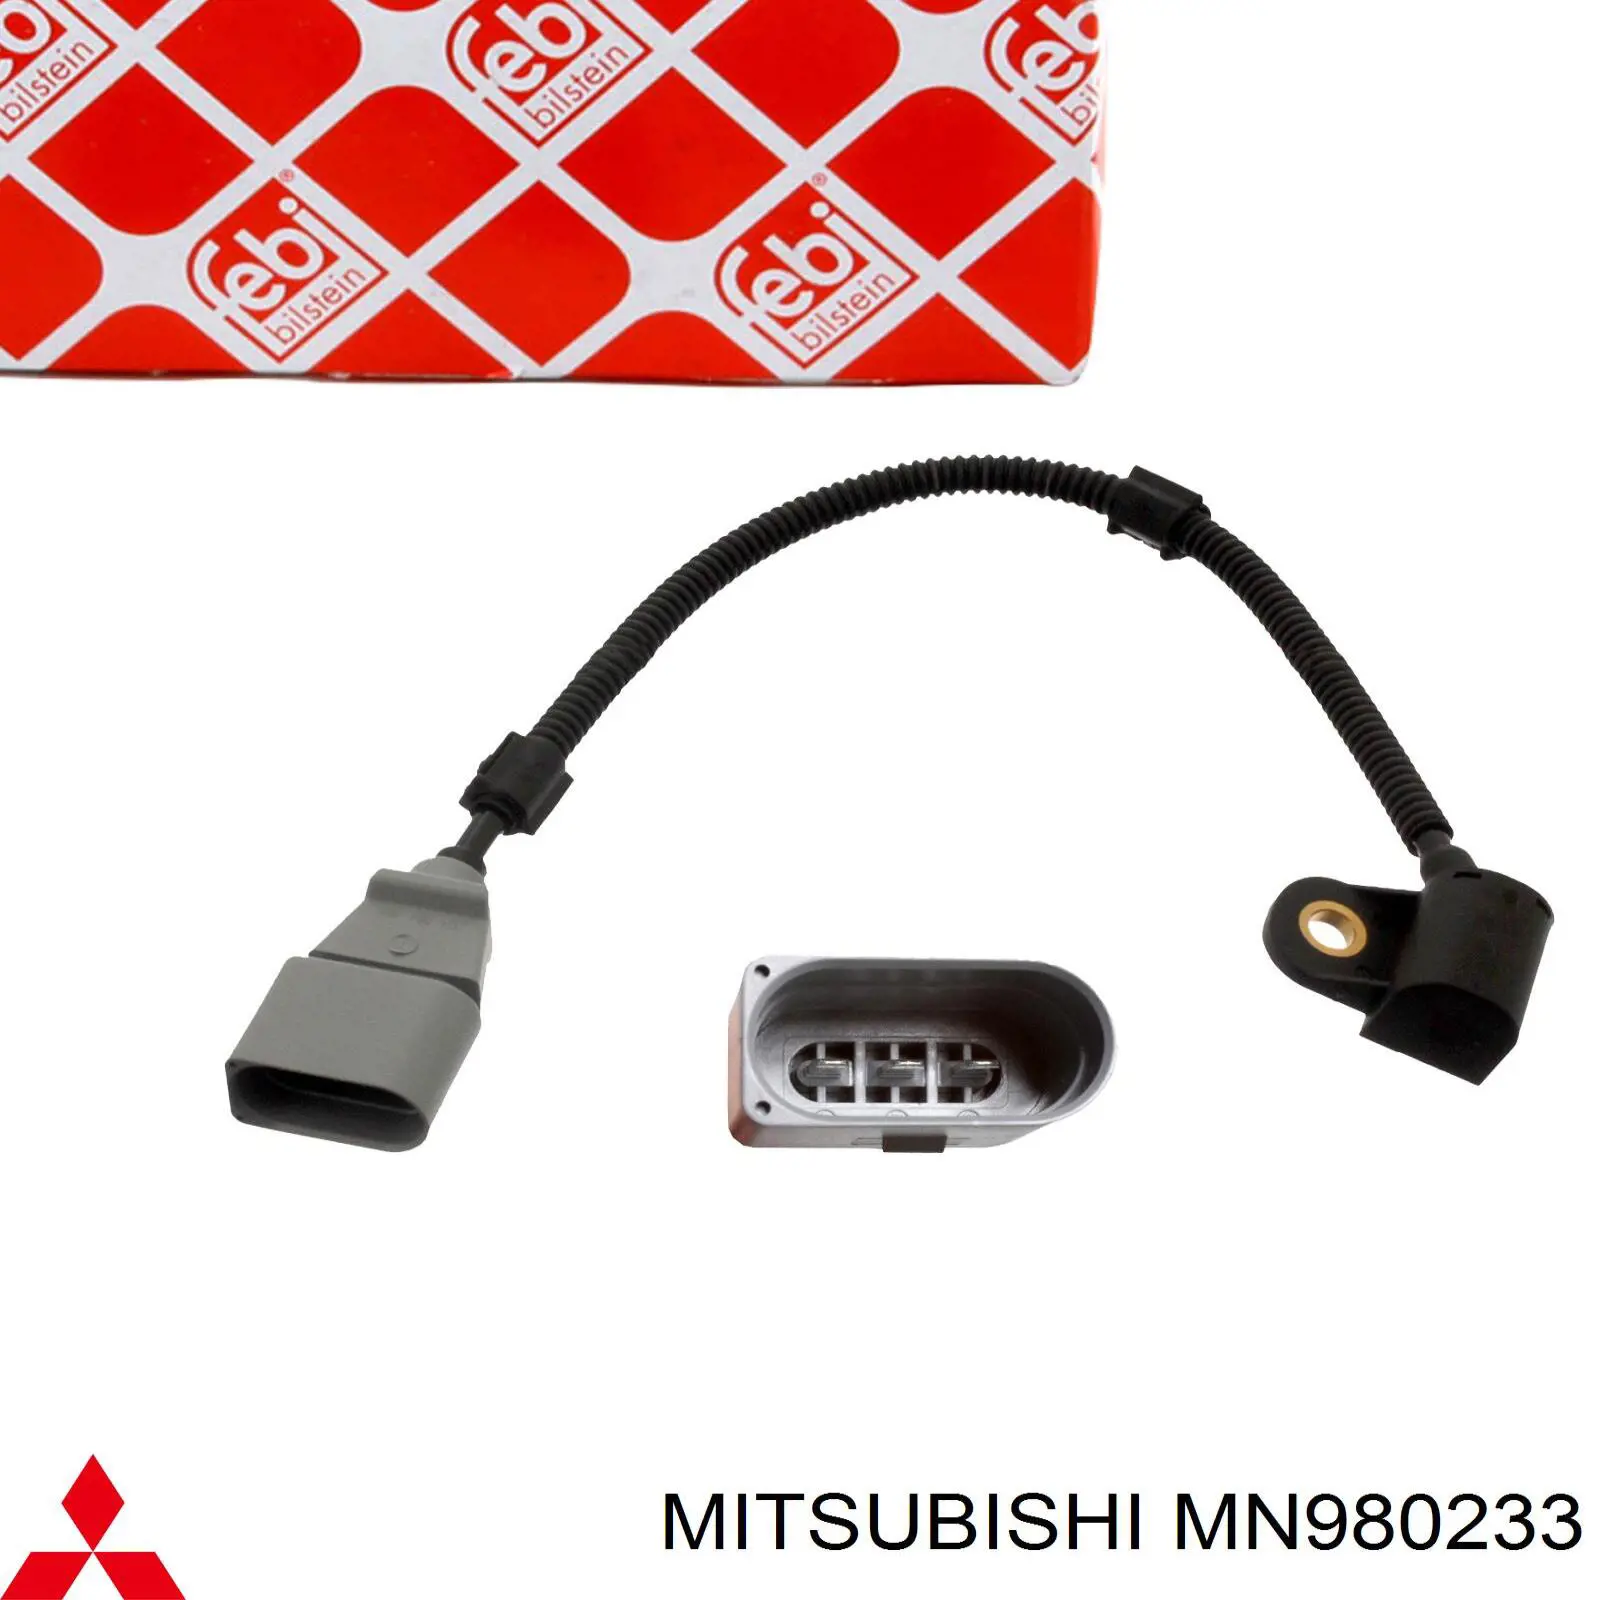 MN980233 Mitsubishi sensor de arbol de levas